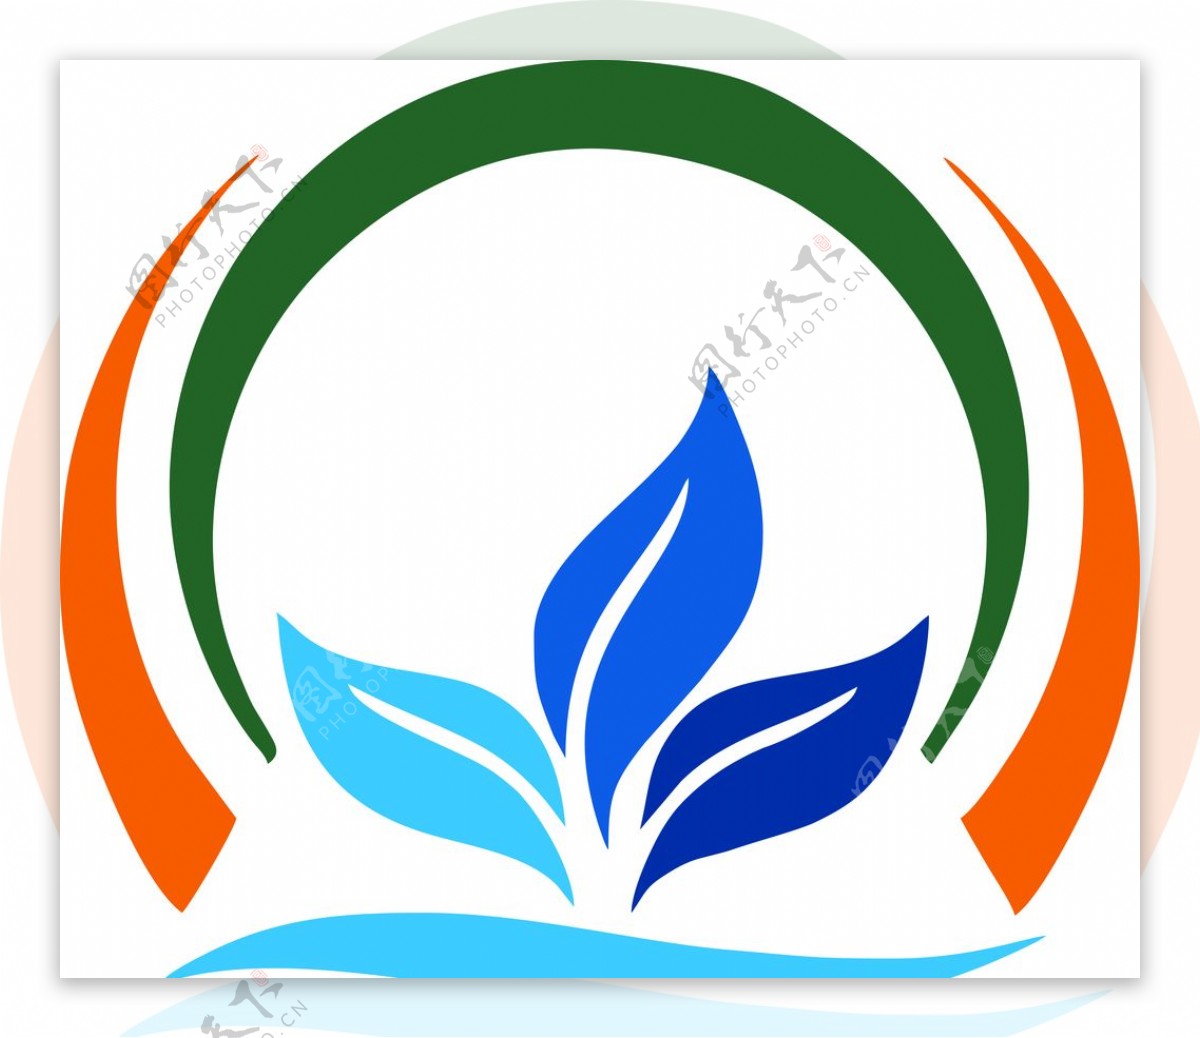 公益树叶创意logo